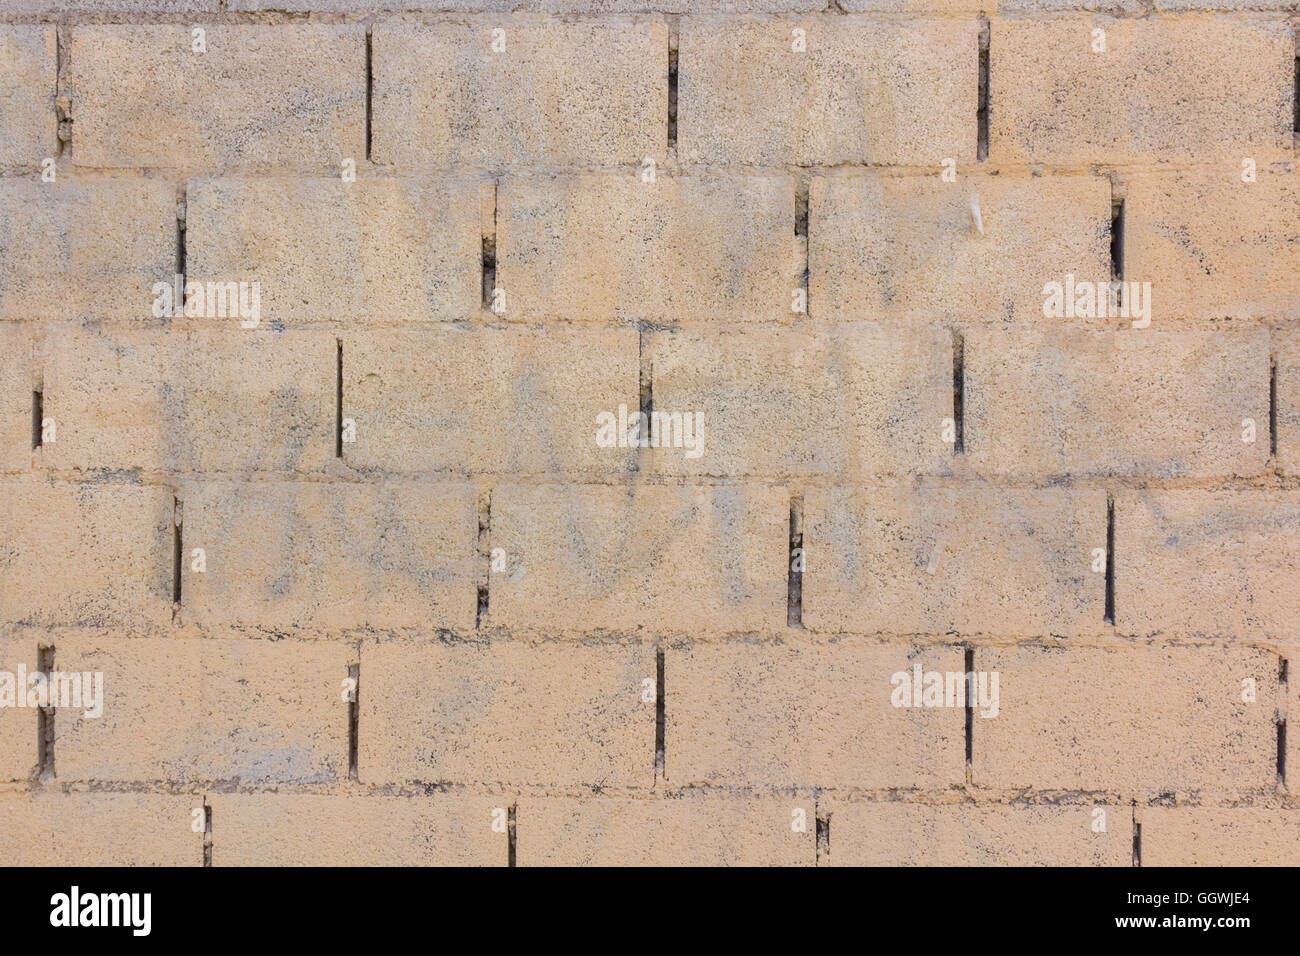 Background wall made of stone blocks Stock Photo